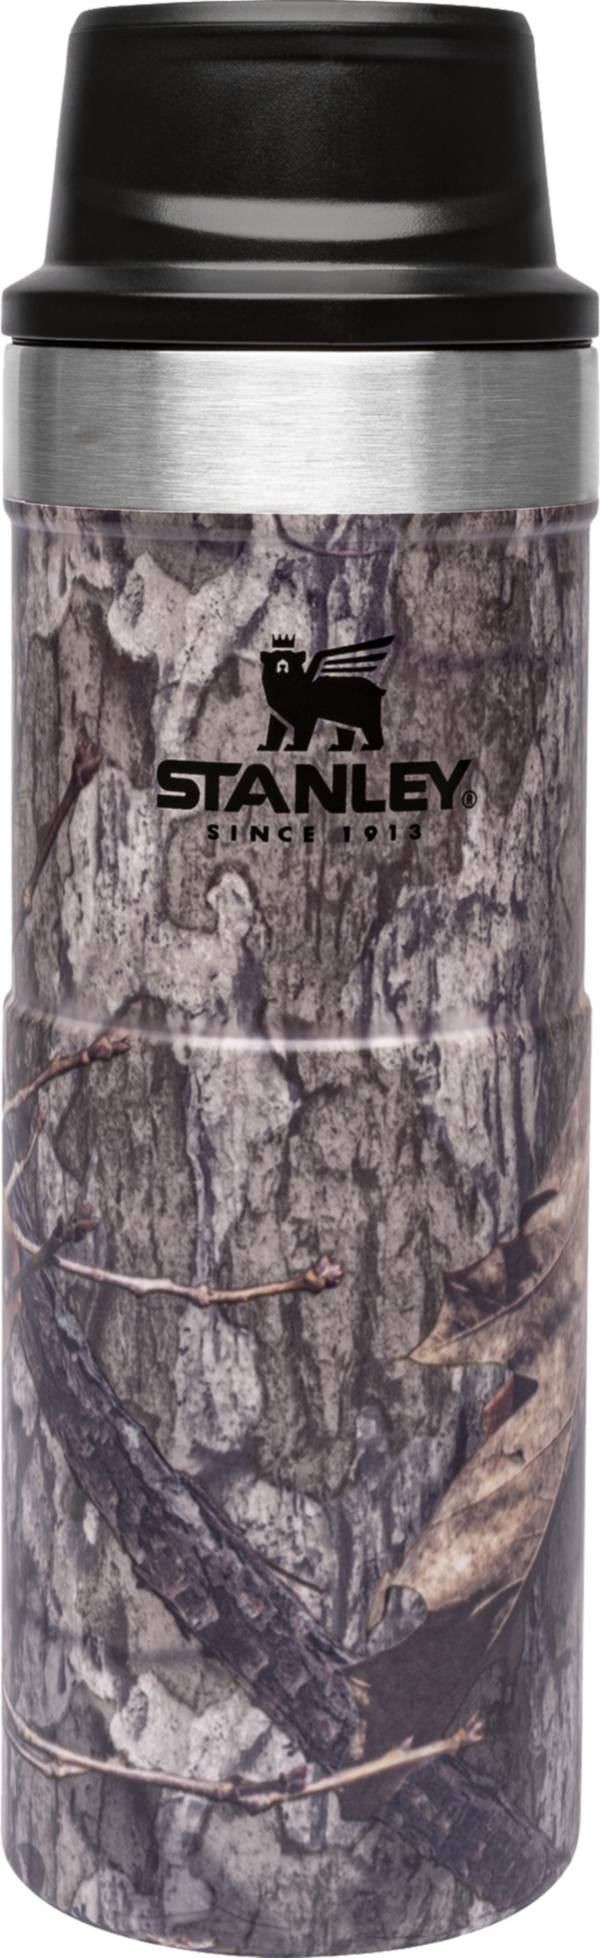 Stanley Classic Trigger-Action 16 oz. Travel Mug product image